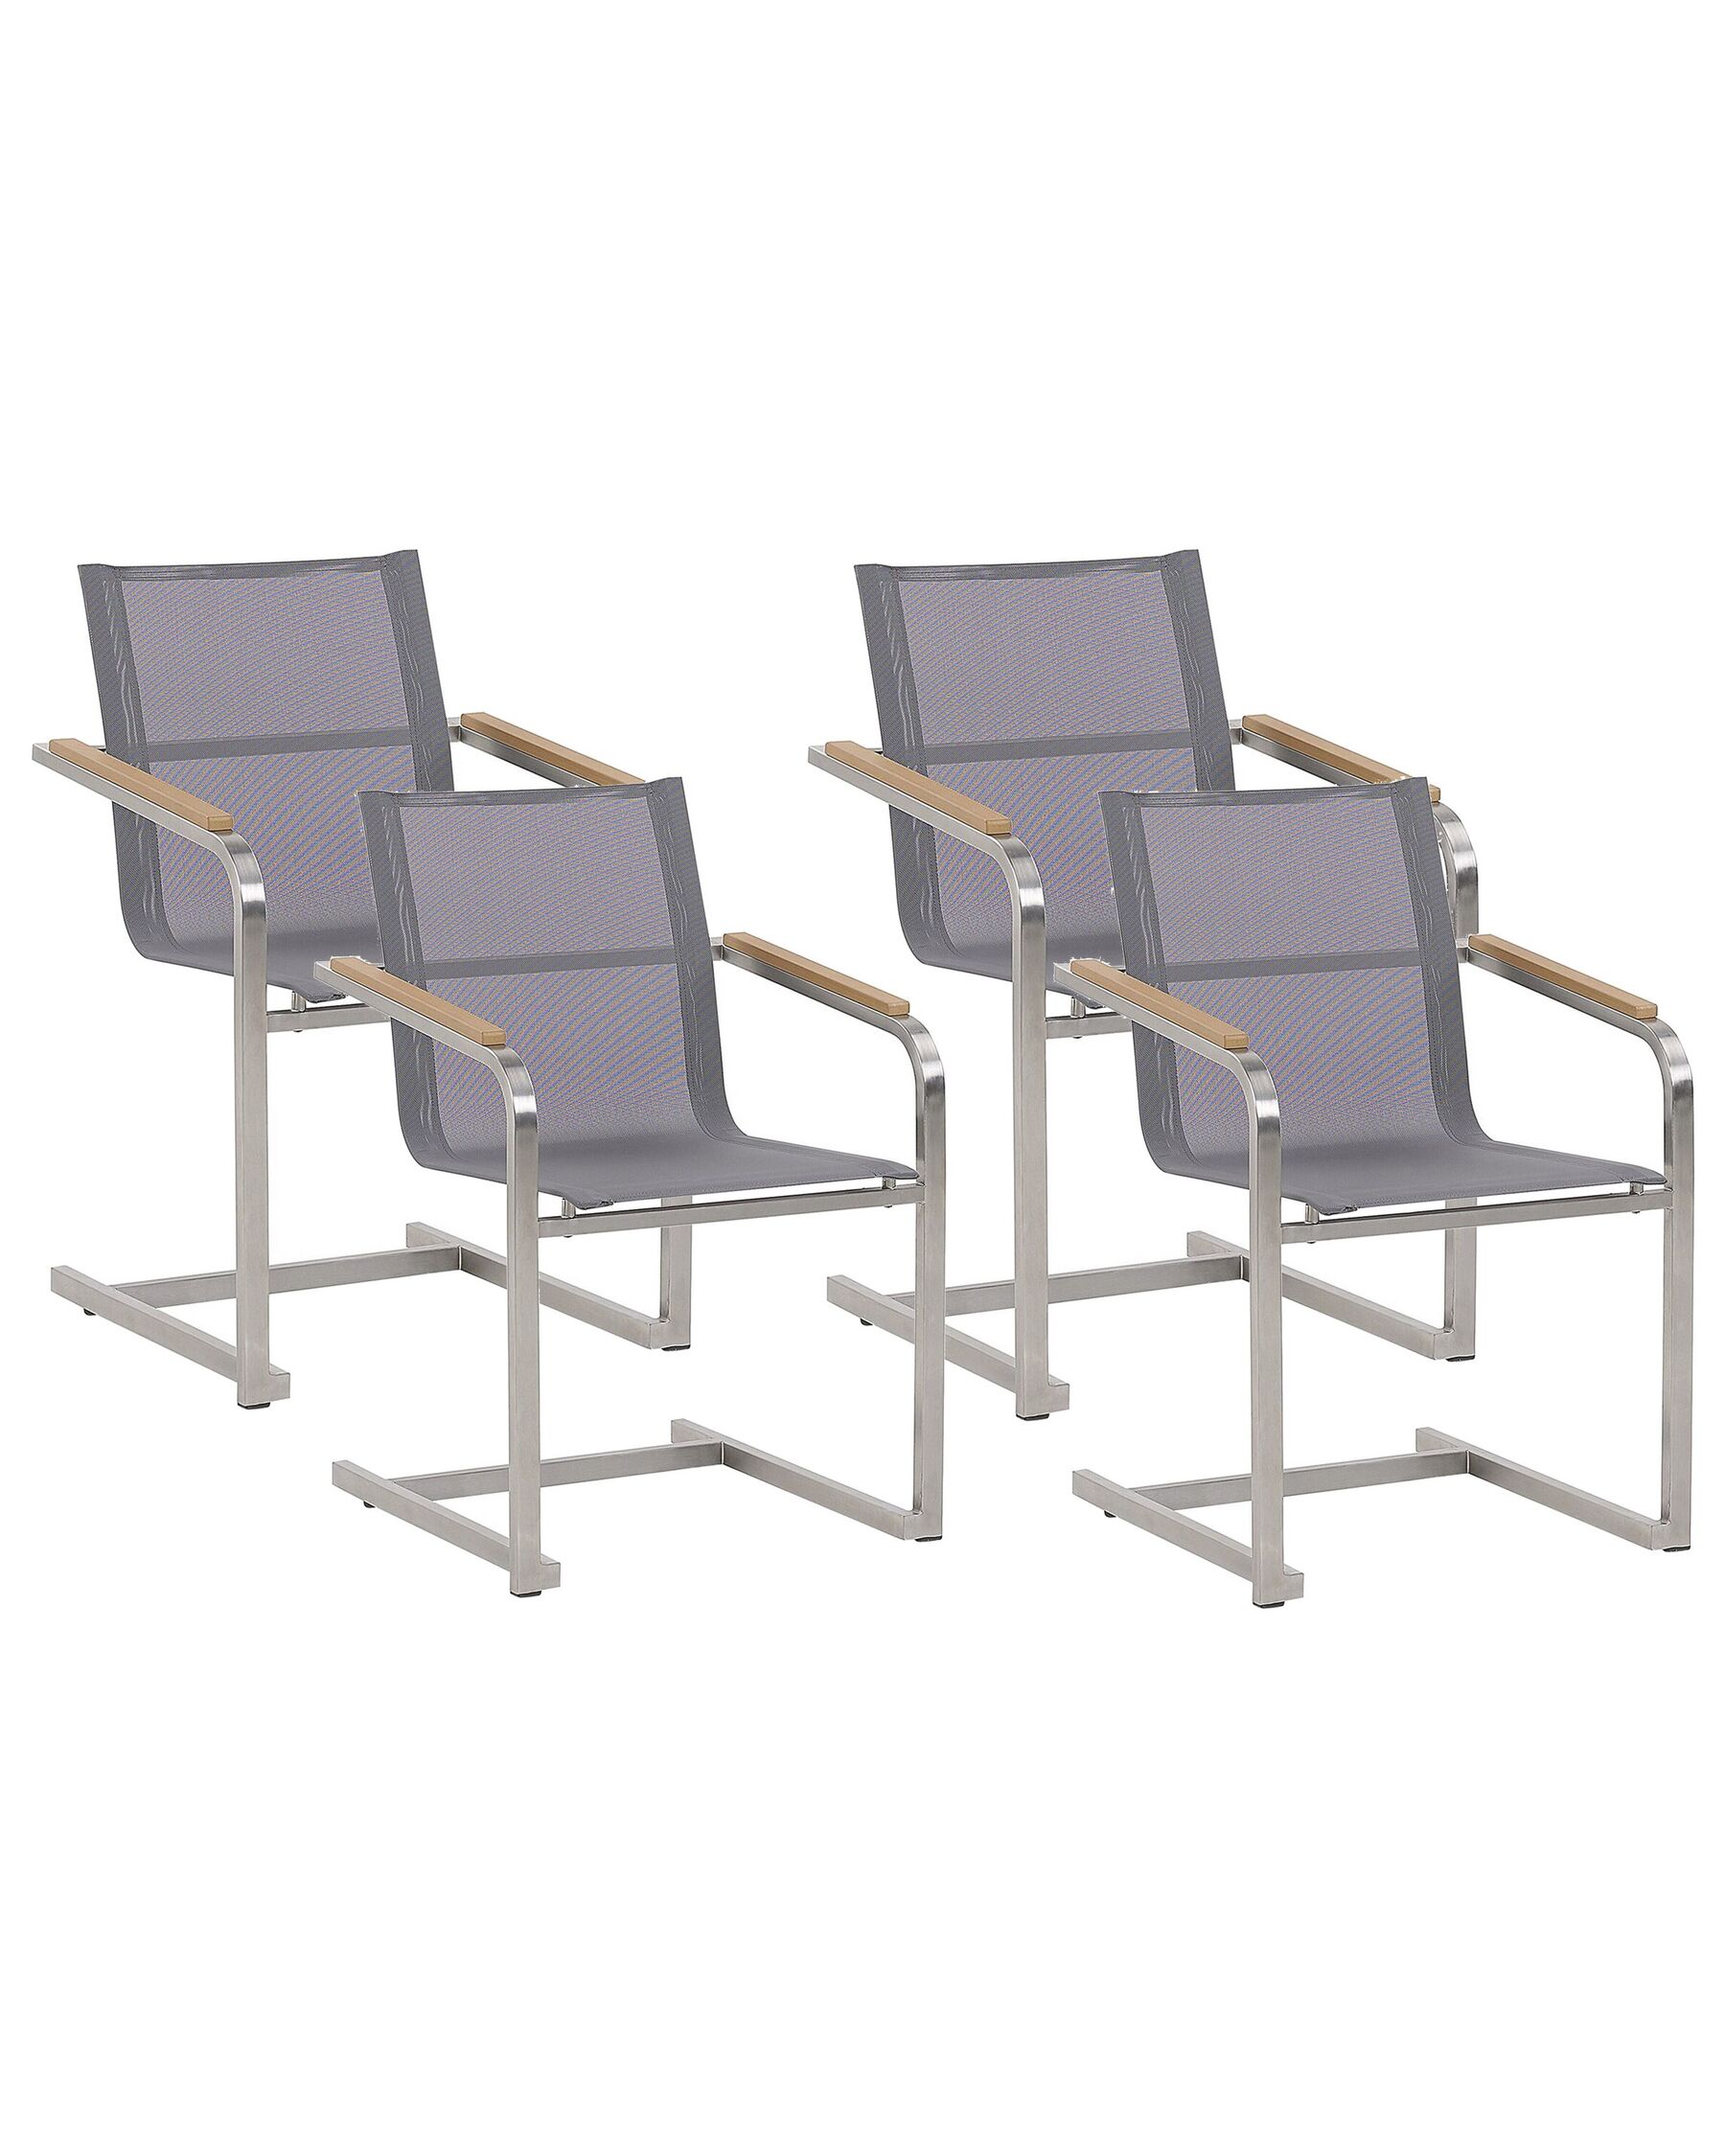 Set of 4 Garden Chairs Grey COSOLETO_818429